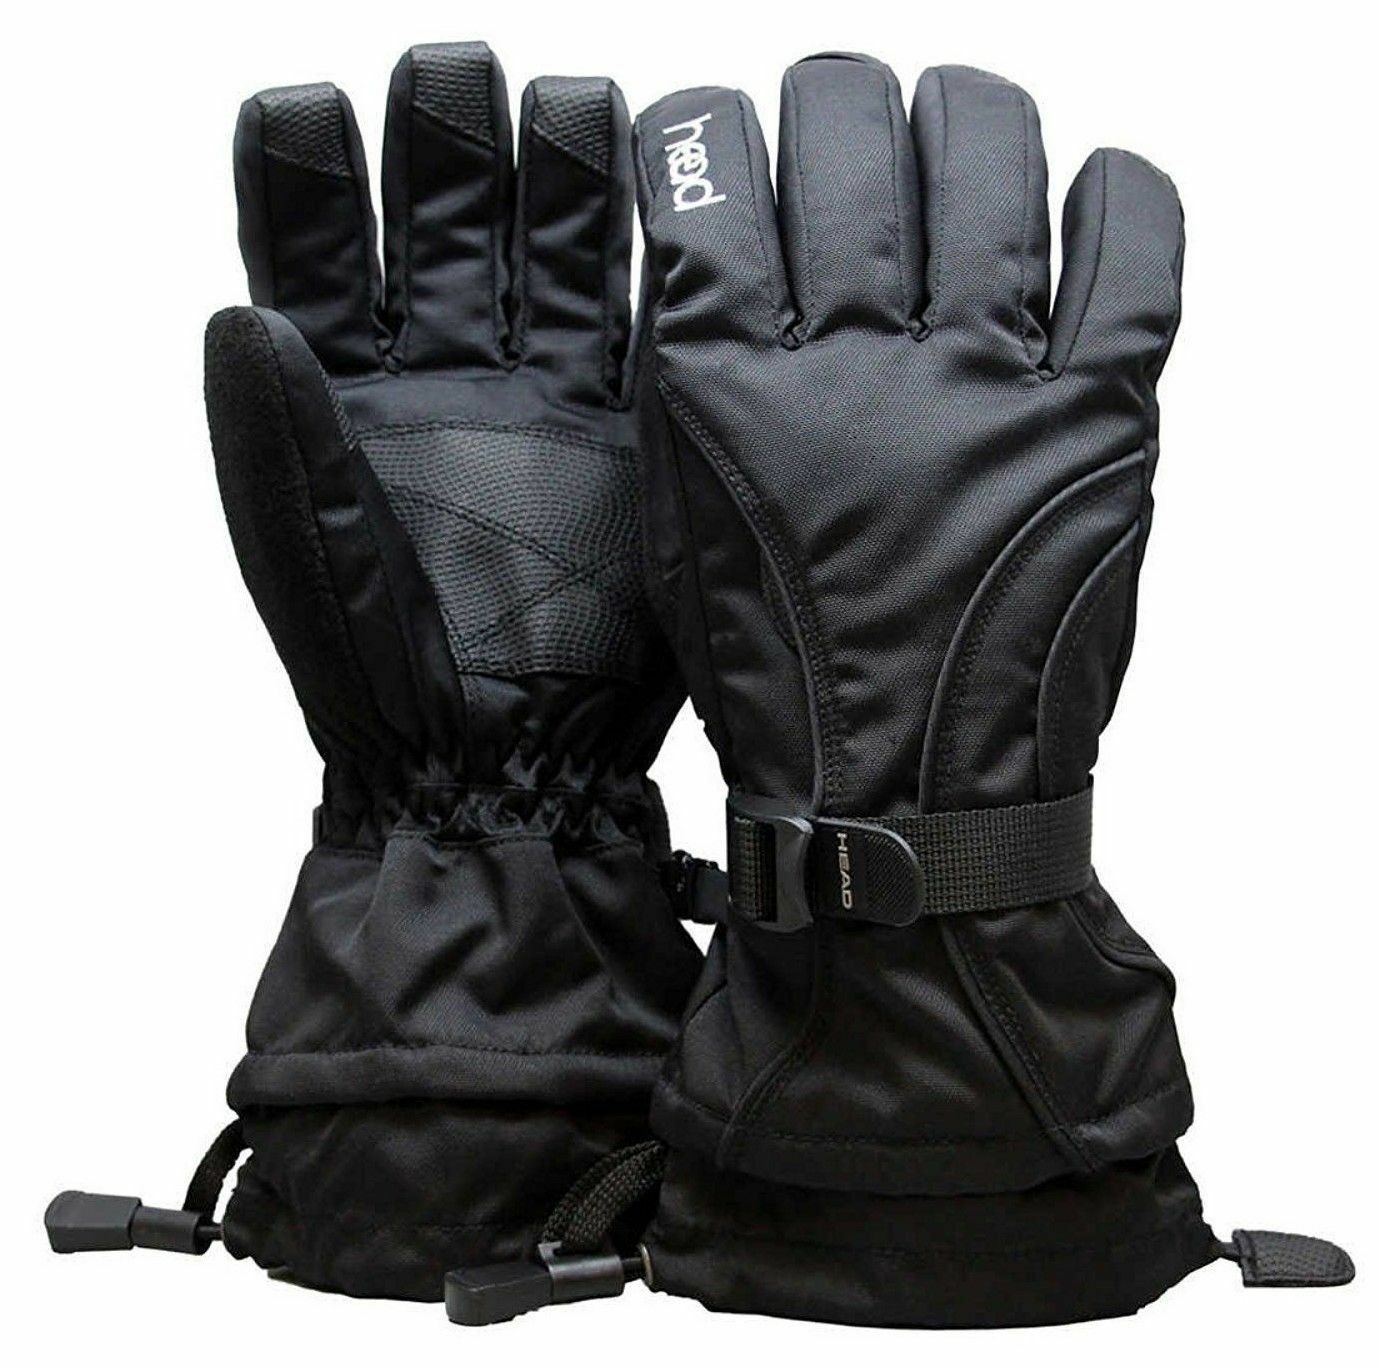 Head Junior Jr Boy's Black Insulated Ski Gloves - Size: M (6-10) & L (10-14)